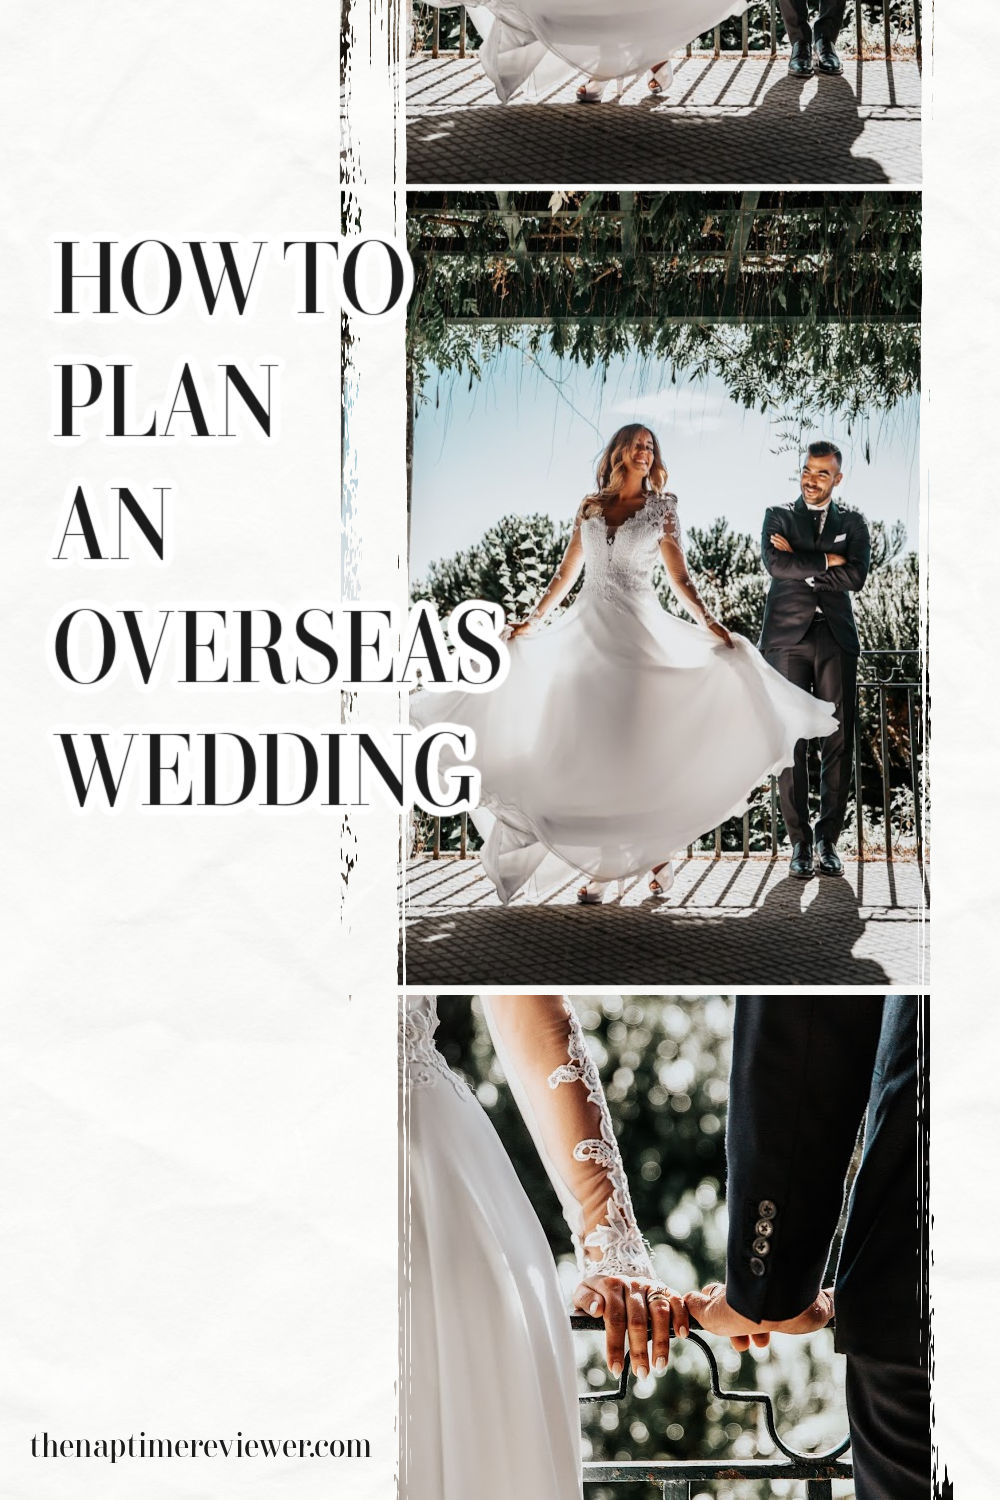 How to plan an overseas wedding.